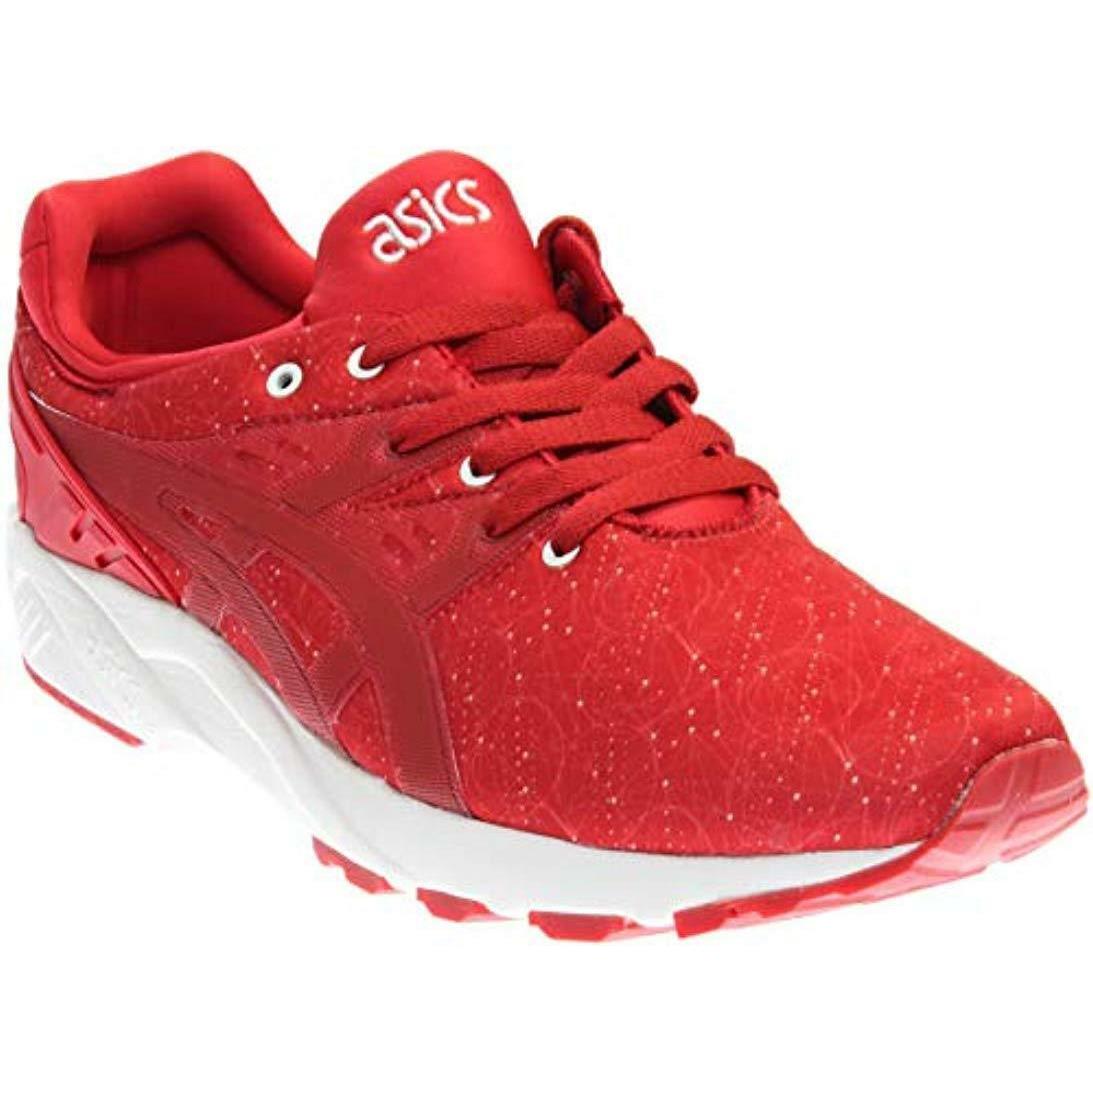 Asics Men`s Gel-kayano Trainer Evo Fashion Sneaker Red/red 12.5 M US